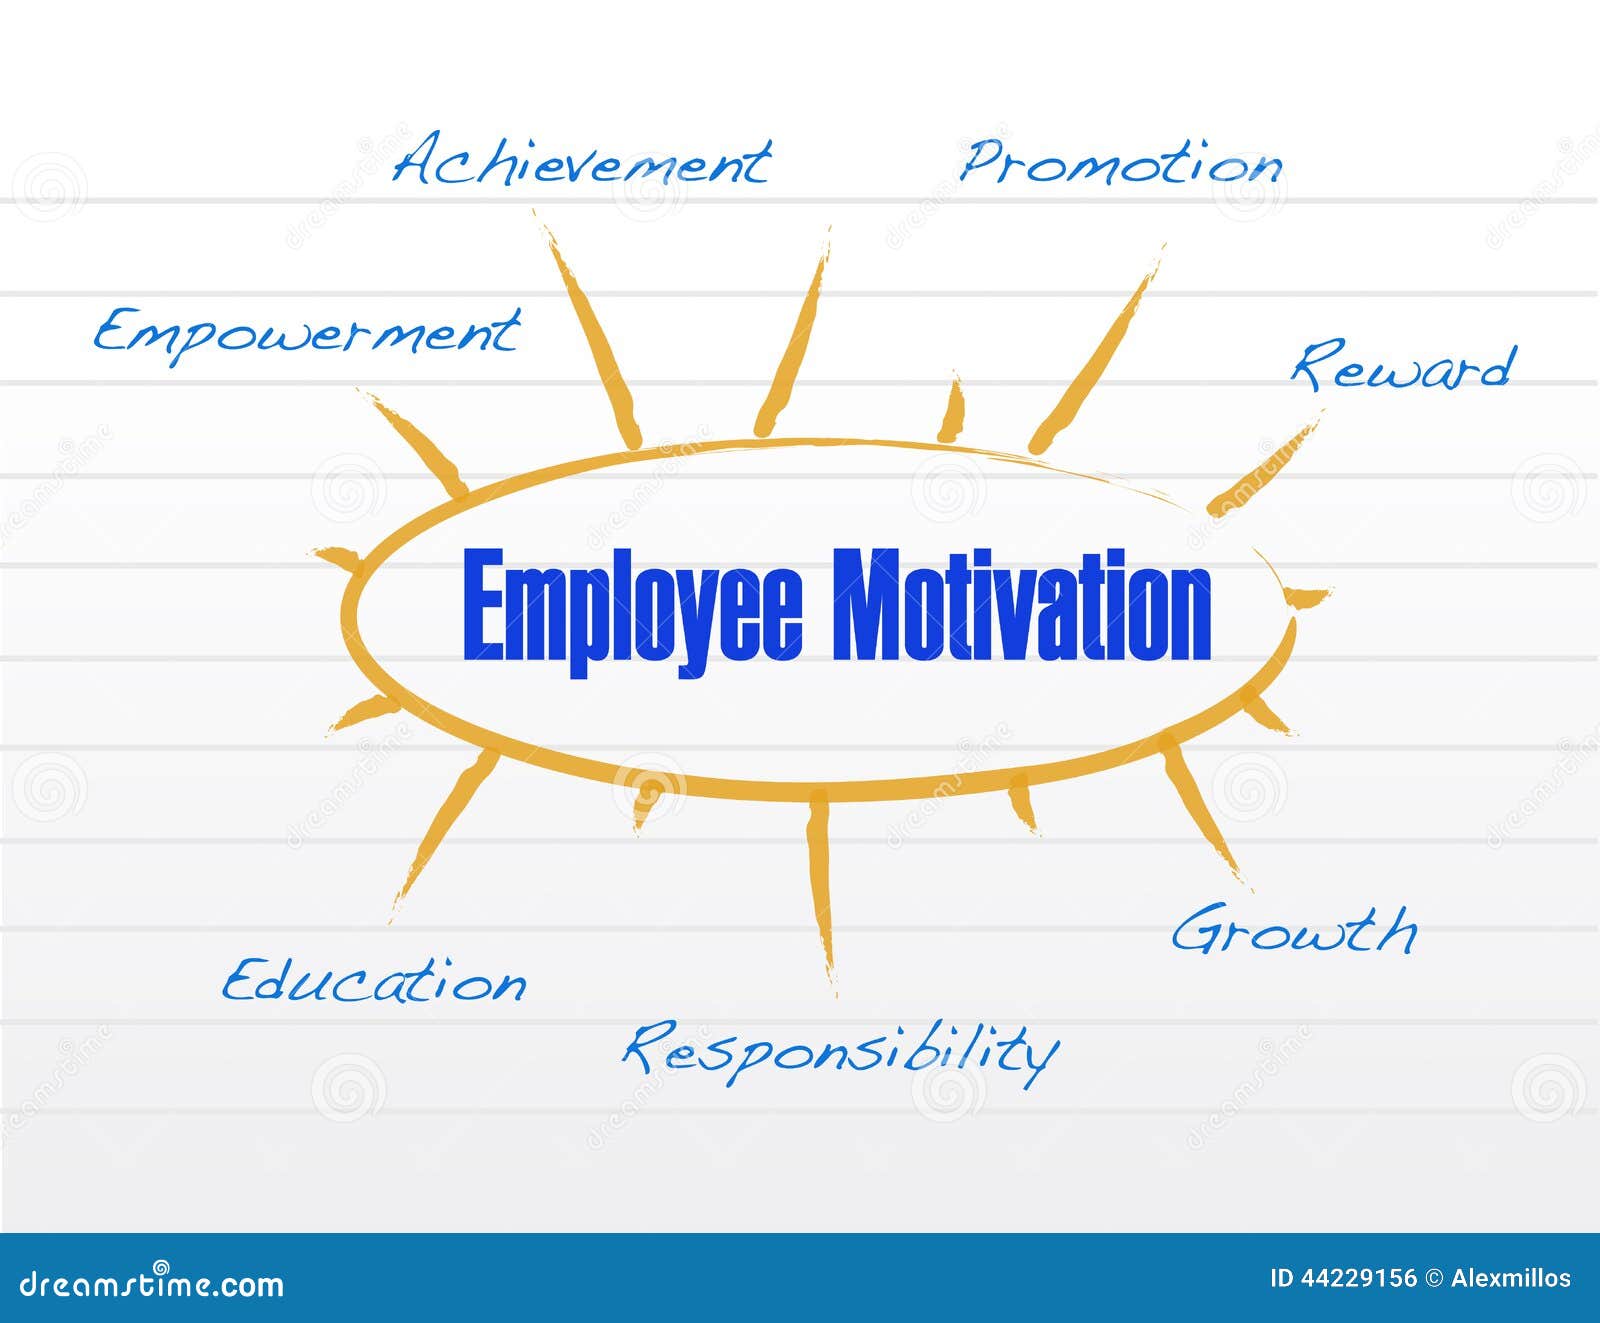 employee motivation clipart - photo #5